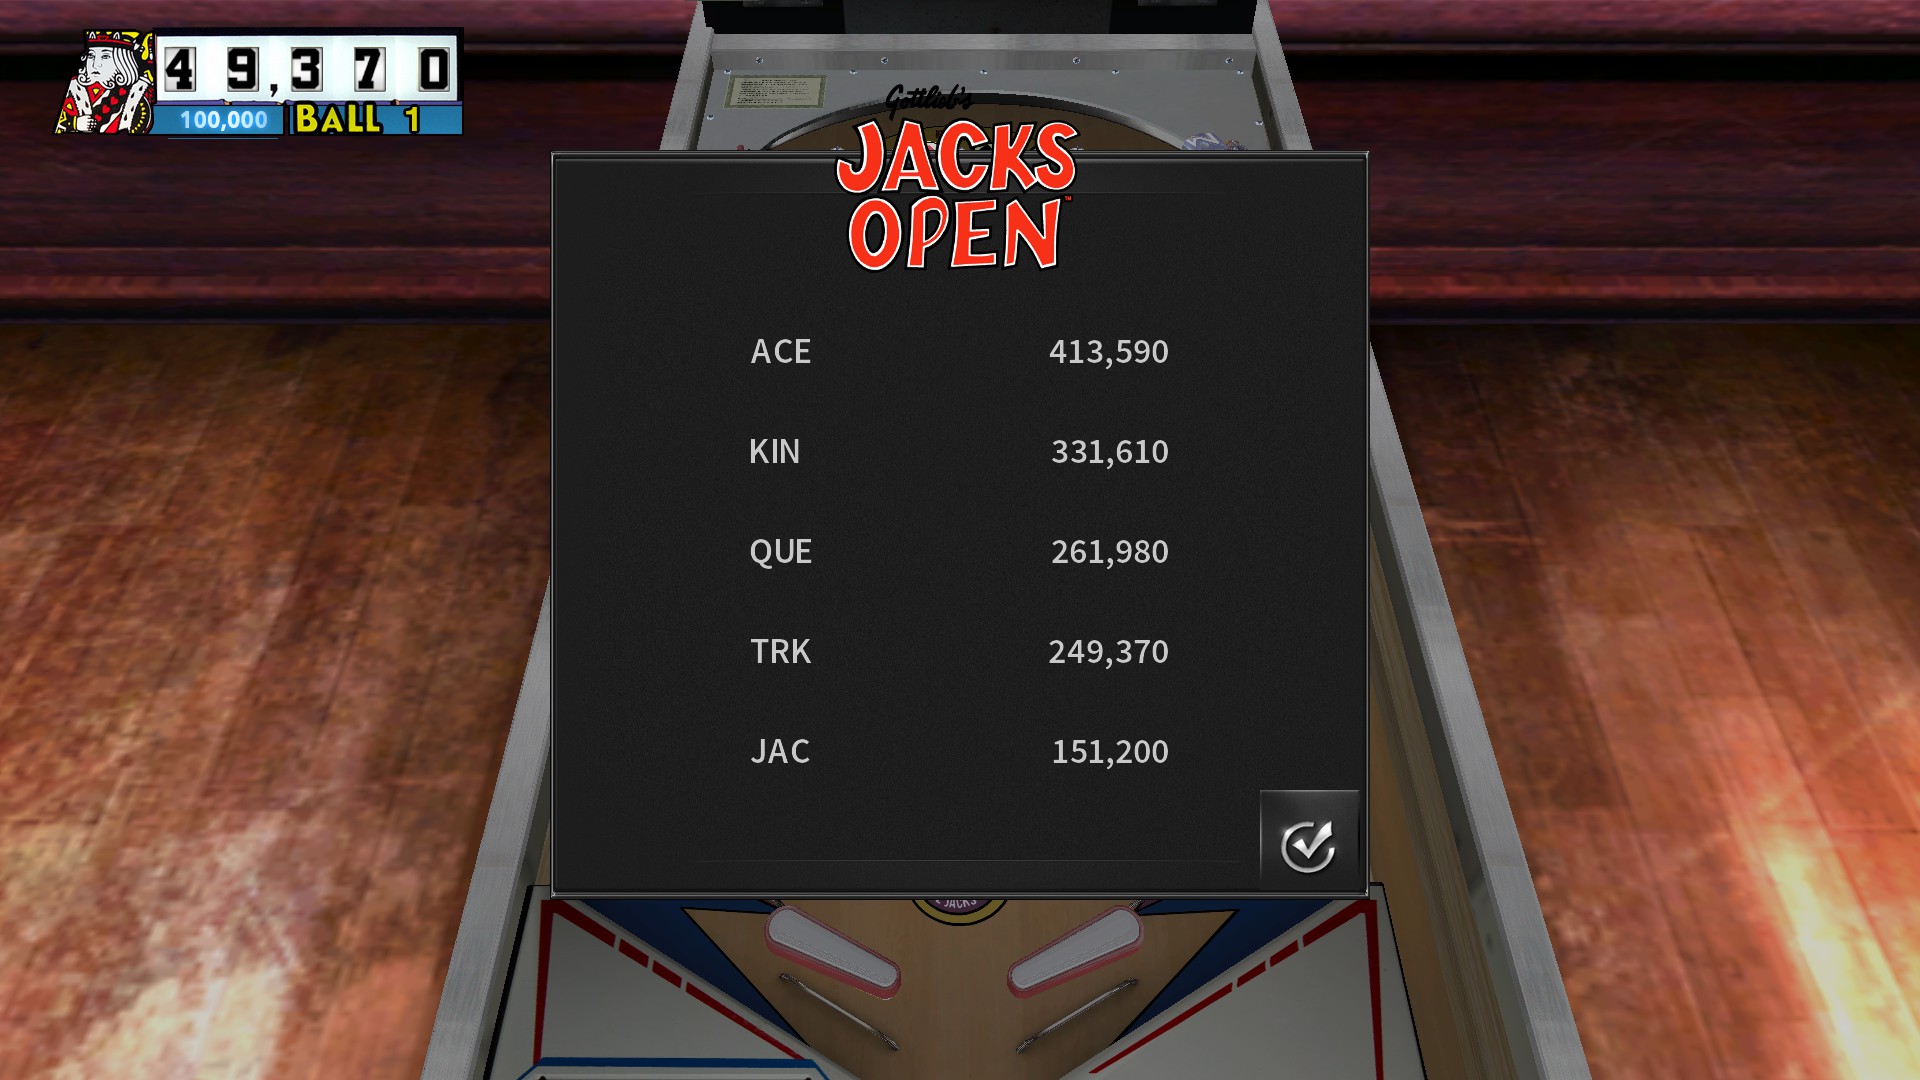 TheTrickster: Pinball Arcade: Jacks Open (PC) 249,370 points on 2016-12-05 03:59:01